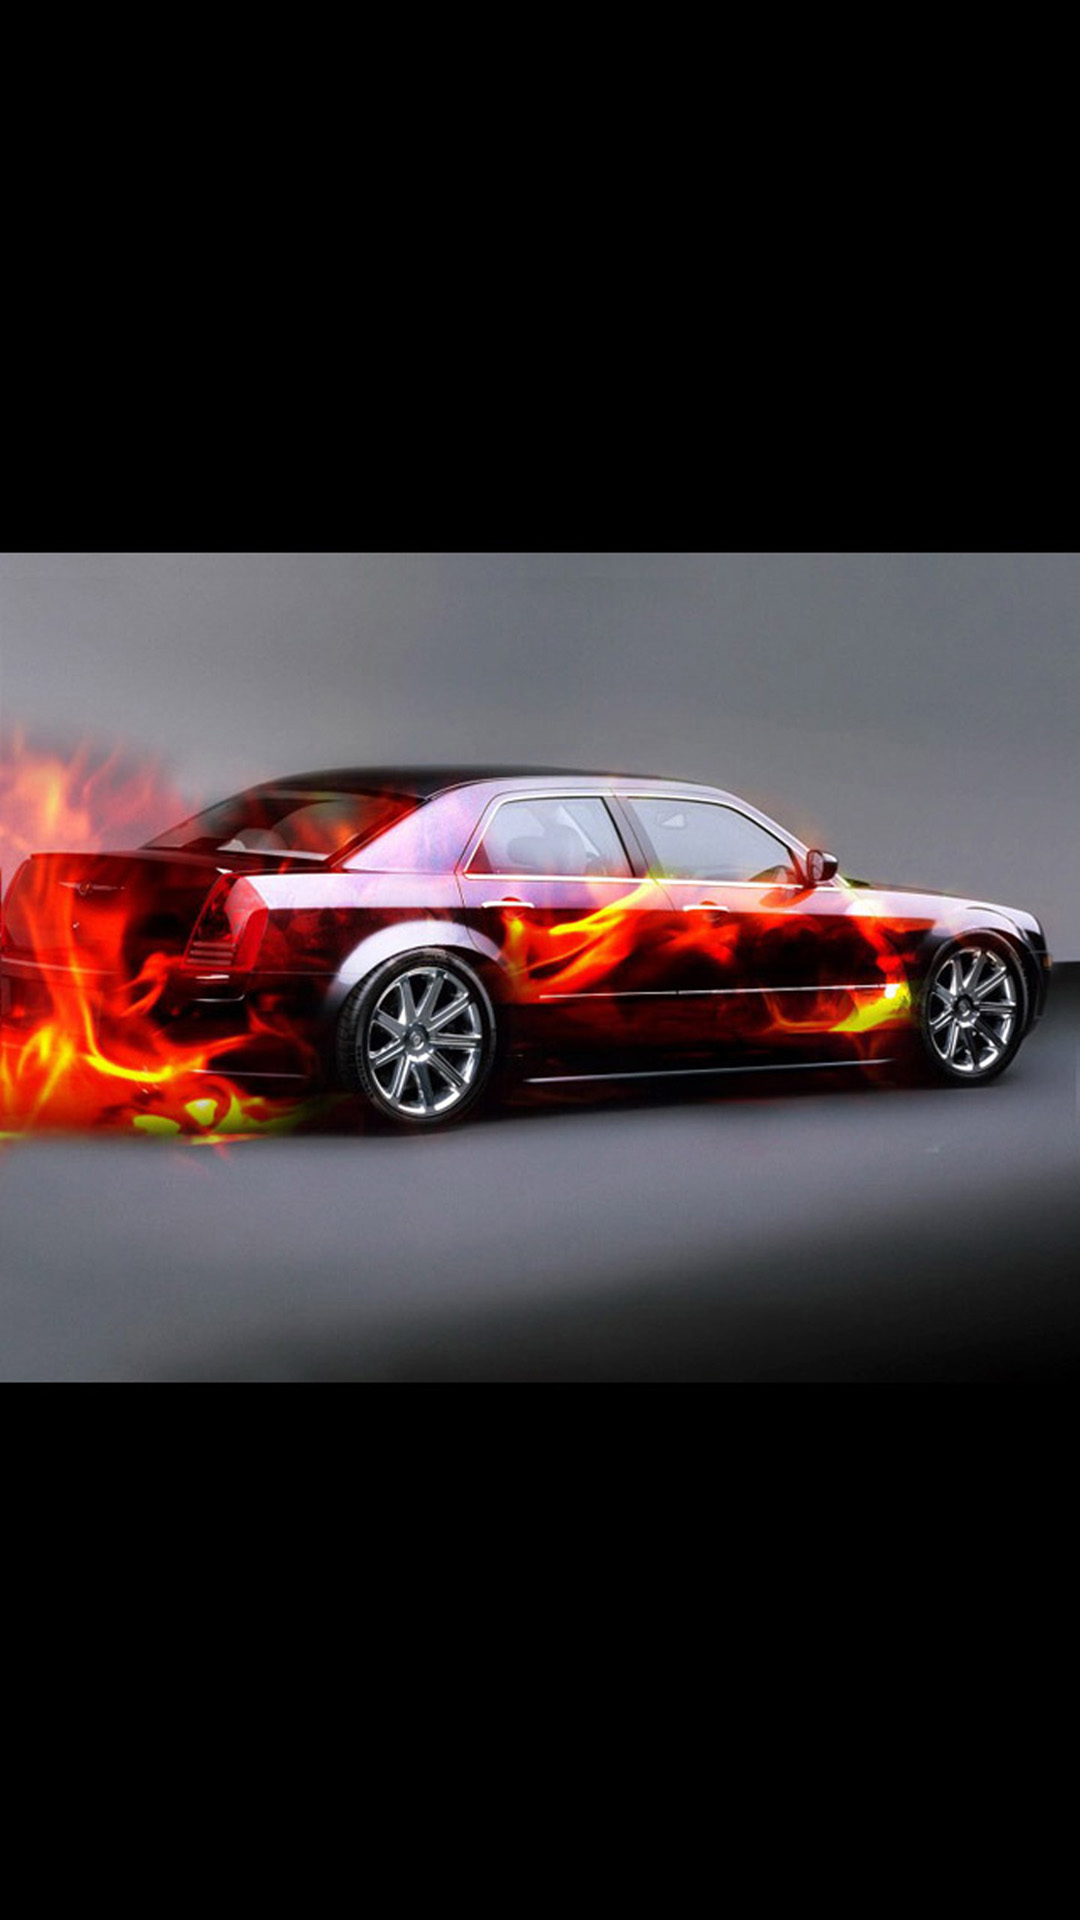 Muscle Car Flames HD Wallpaper iPhone 6 plus   wallpapersmobilenet